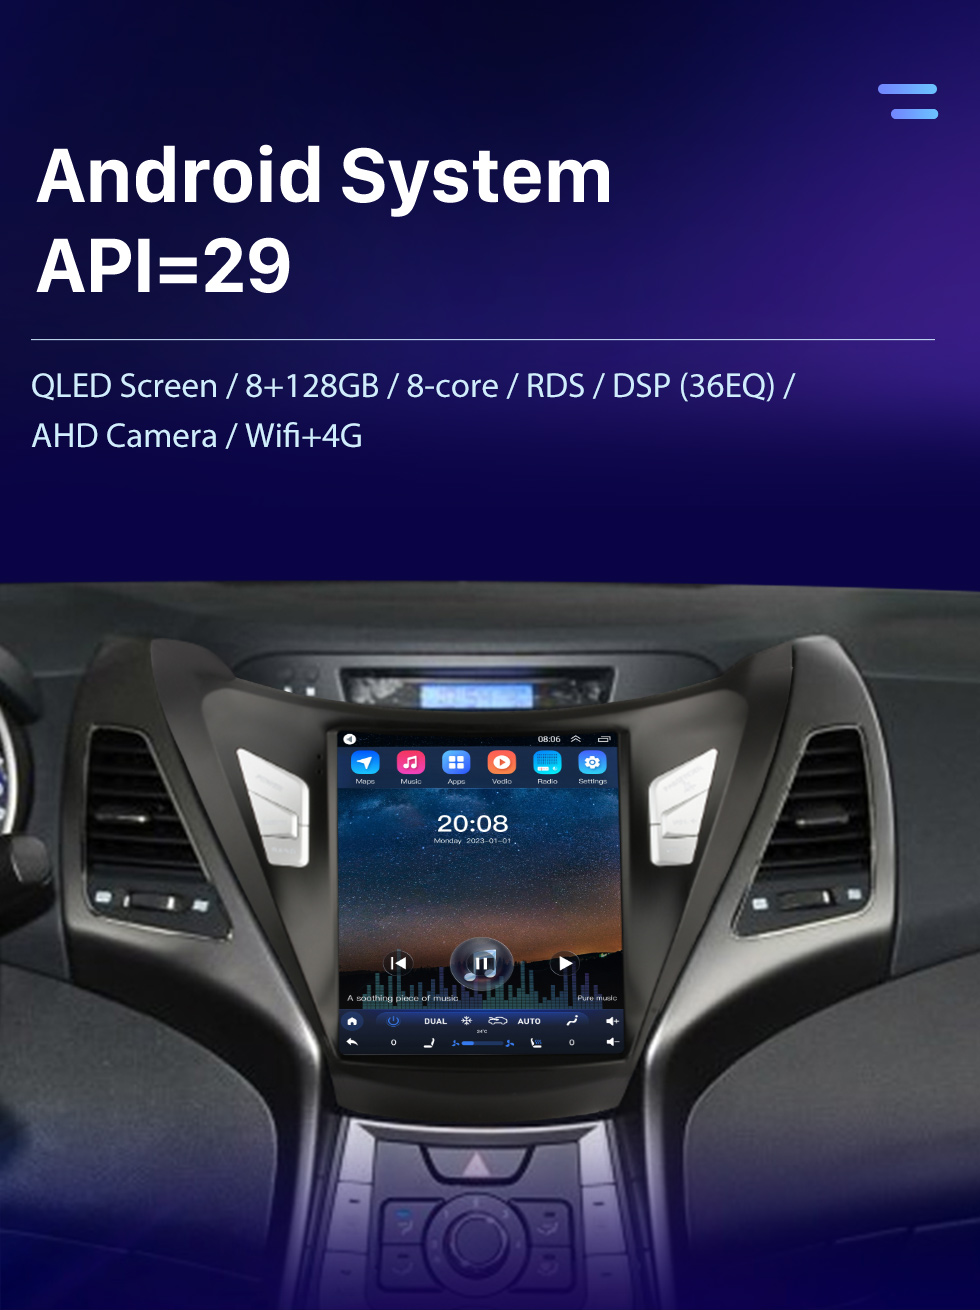 For Hyundai Elantra 2011-2013 9.7'' Car WiFi Stereo Radio GPS Navigation 2+32GB